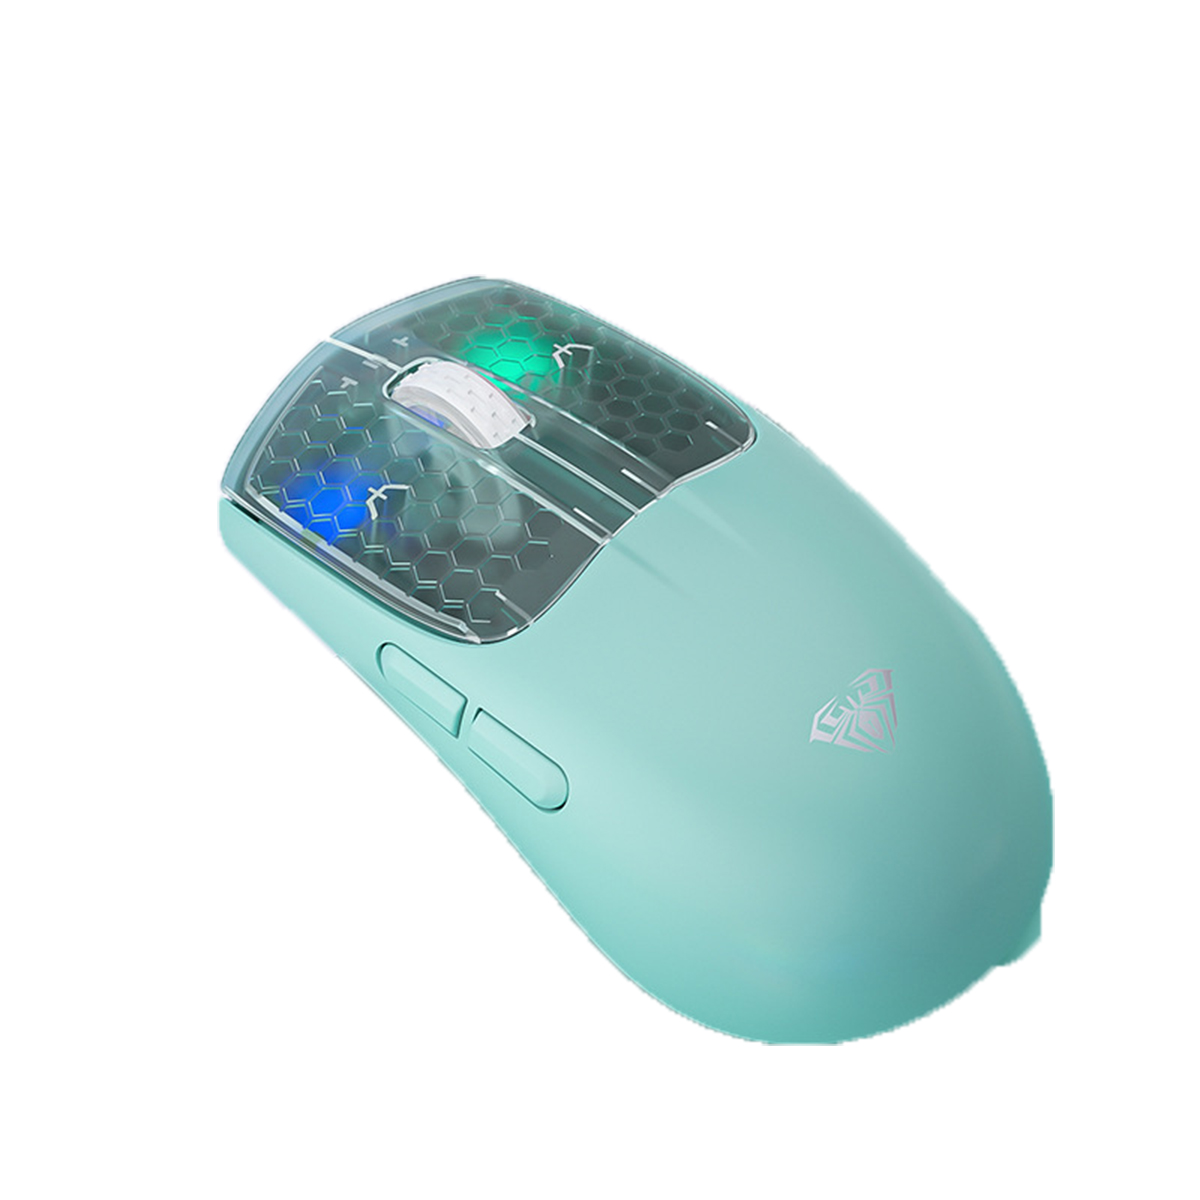 BYTELIKE Kabellose Maus Bluetooth Tri-mode Maus Wiederaufladbar Leichtgewicht Gaming Büro Laptop Maus, grün